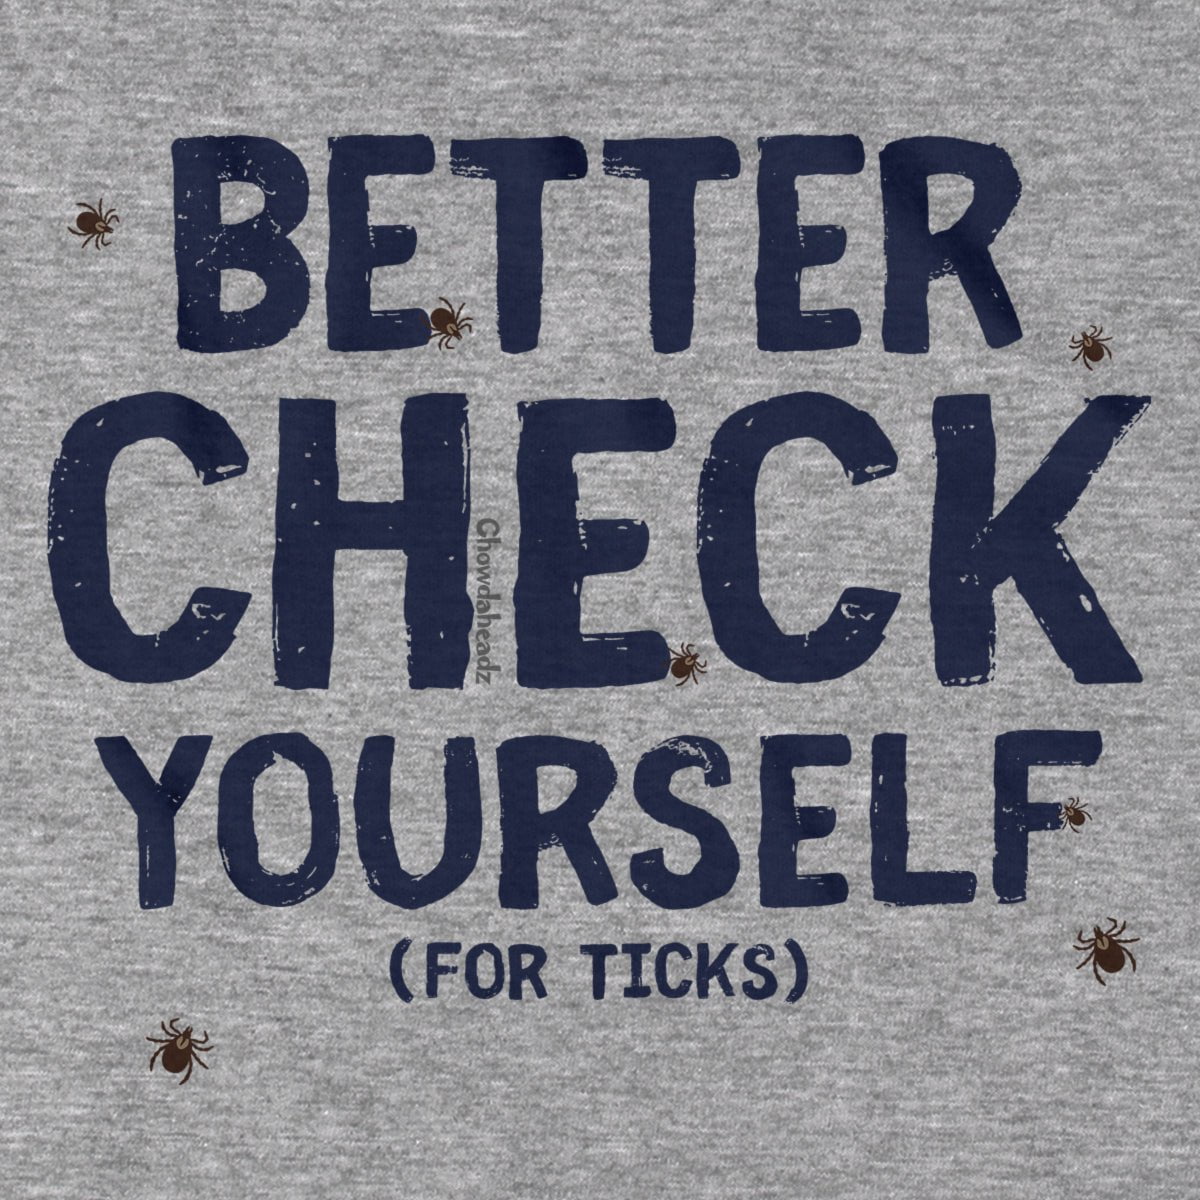 Better Check Yourself (For Ticks) T-Shirt - Chowdaheadz